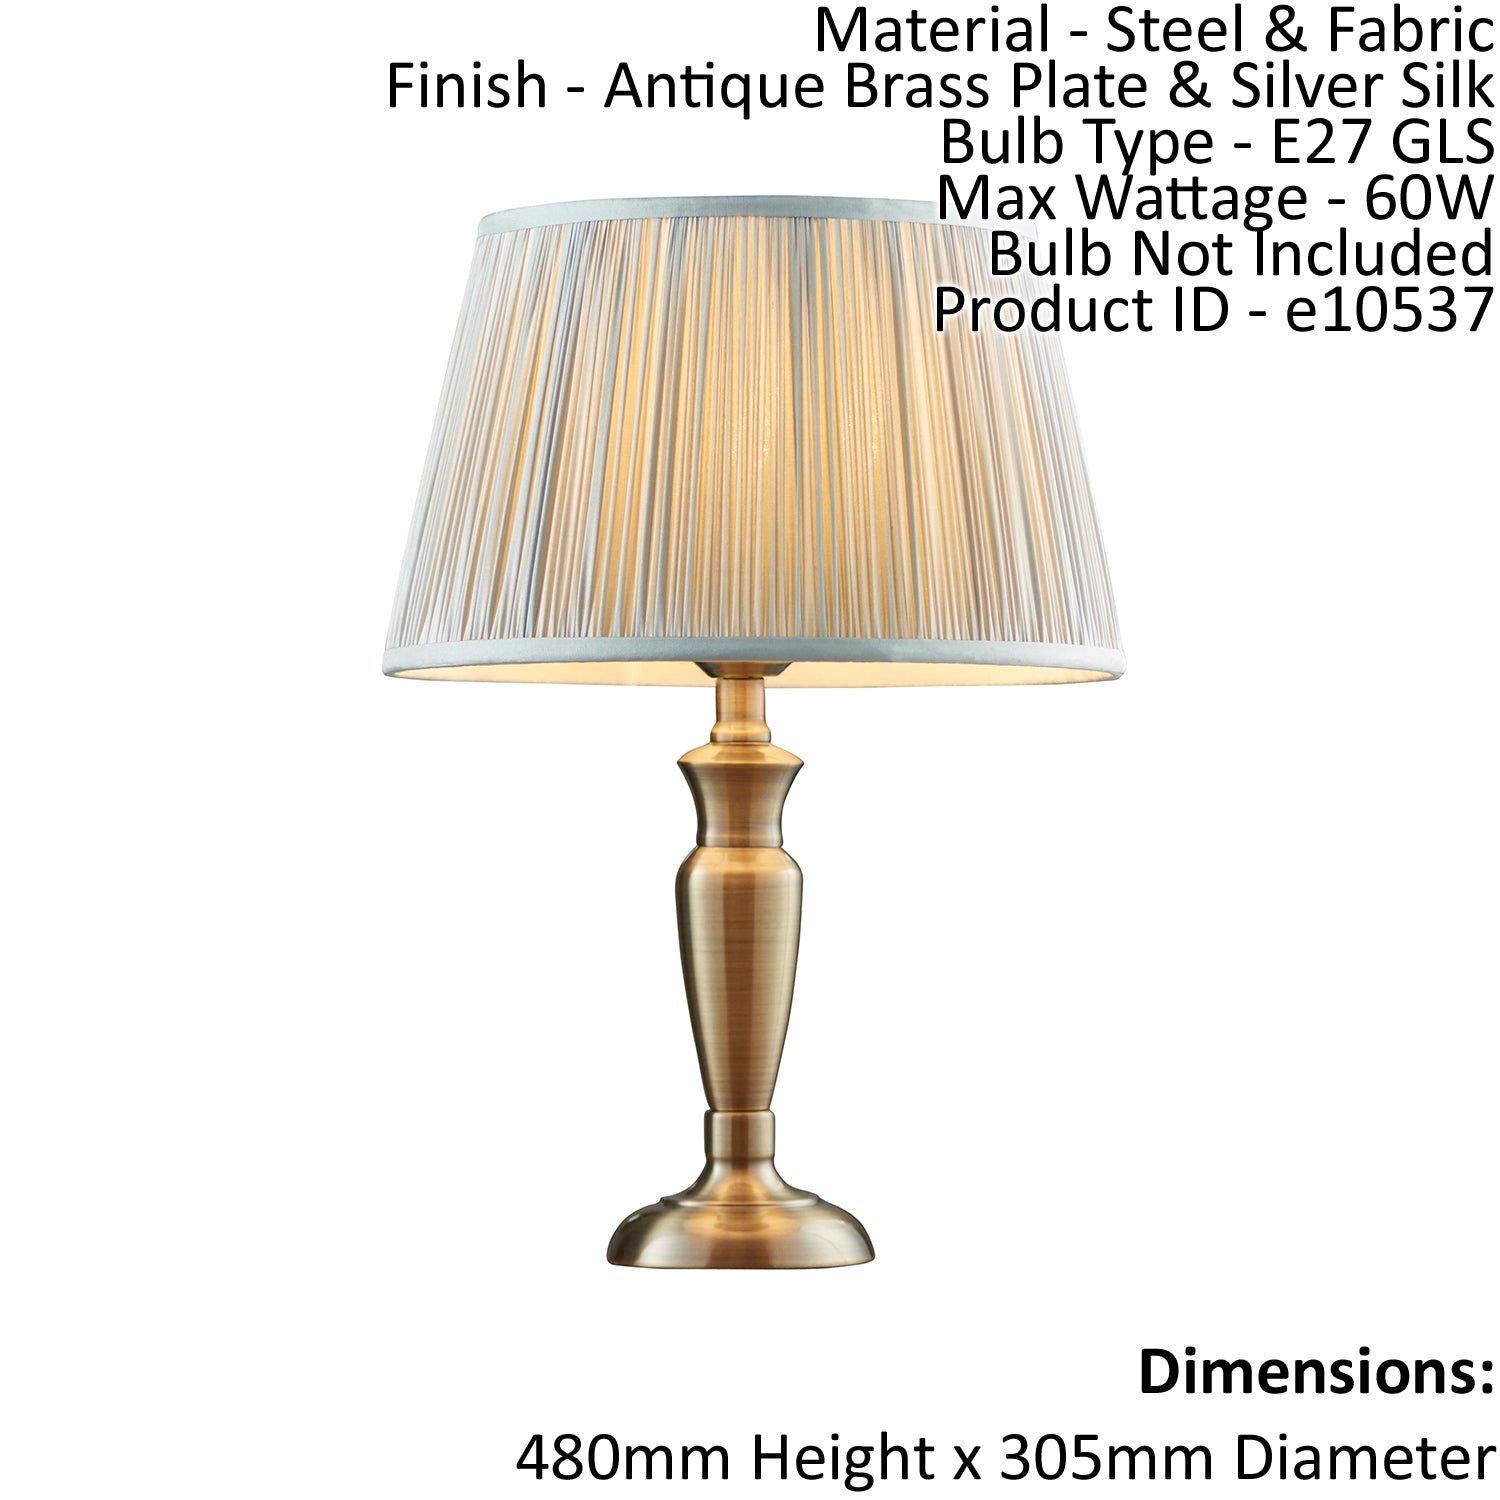 Table Lamp Antique Brass & Silver Silk 60W E27 GLS Base & Shade e10245